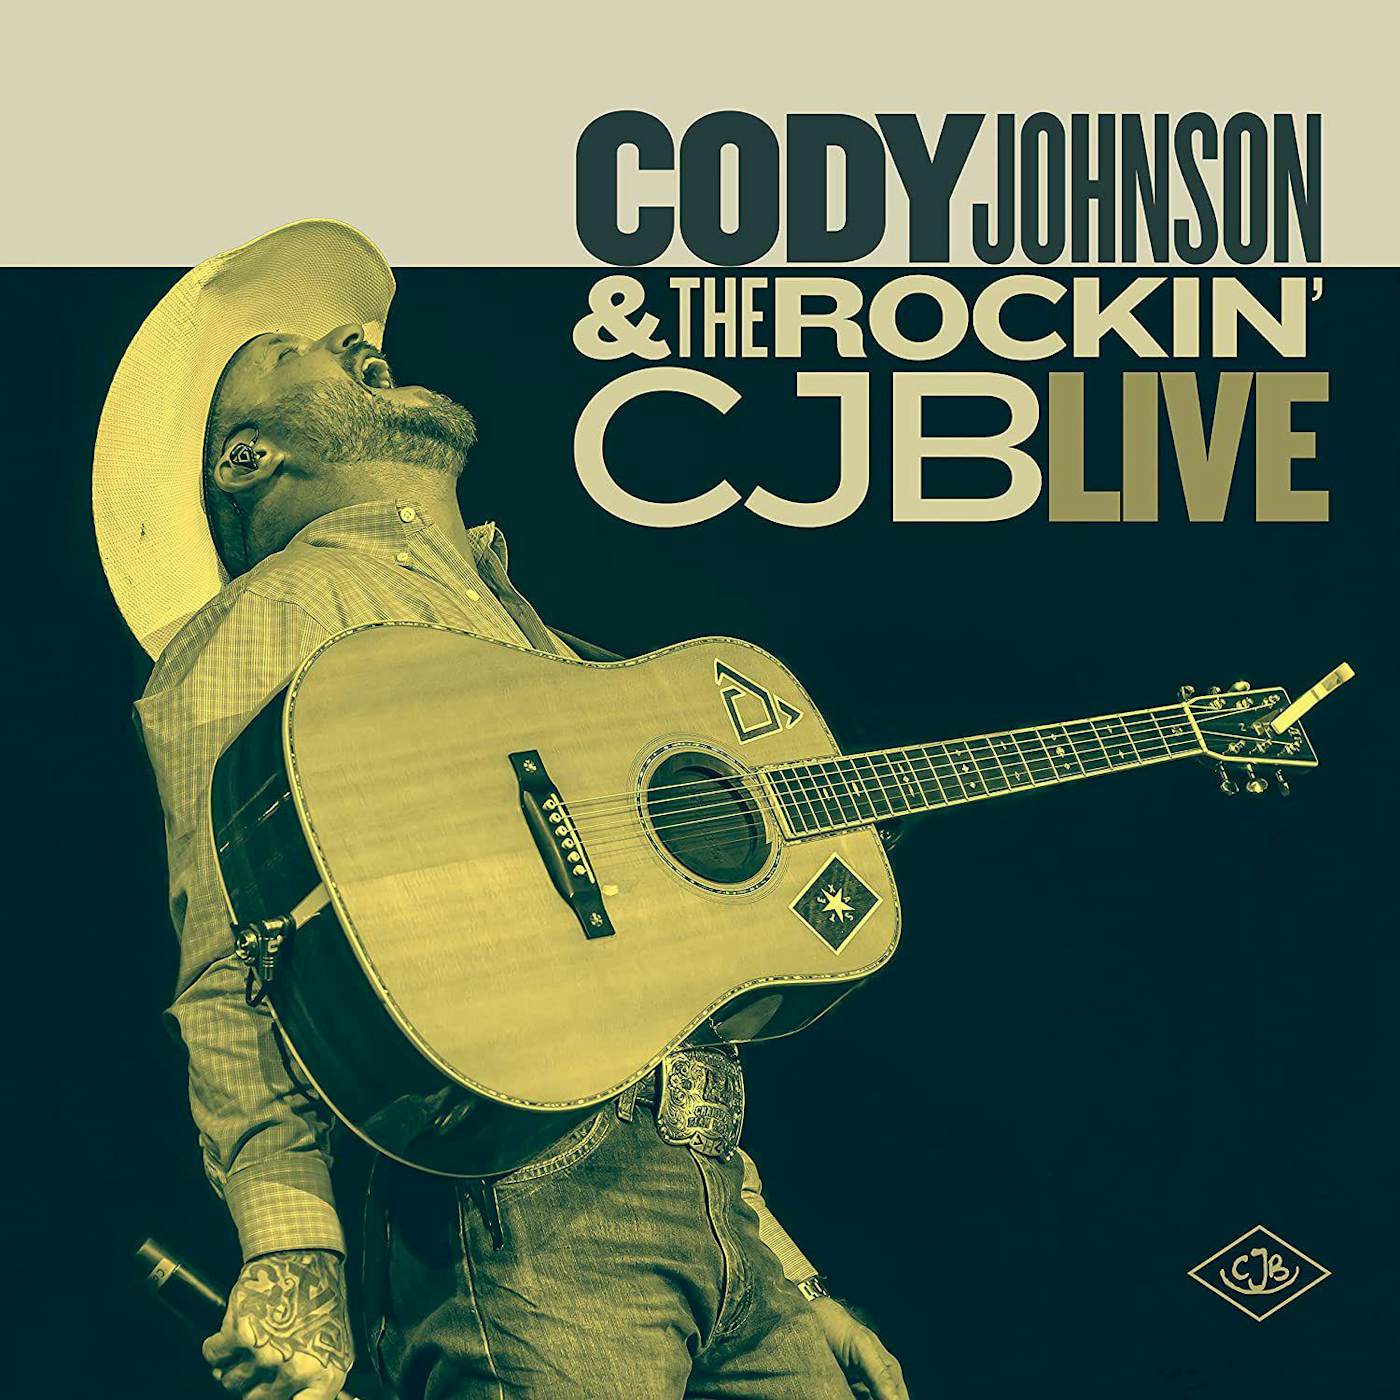  Cody Johnson & The Rockin' CJB Live (2CD) (Vinyl)